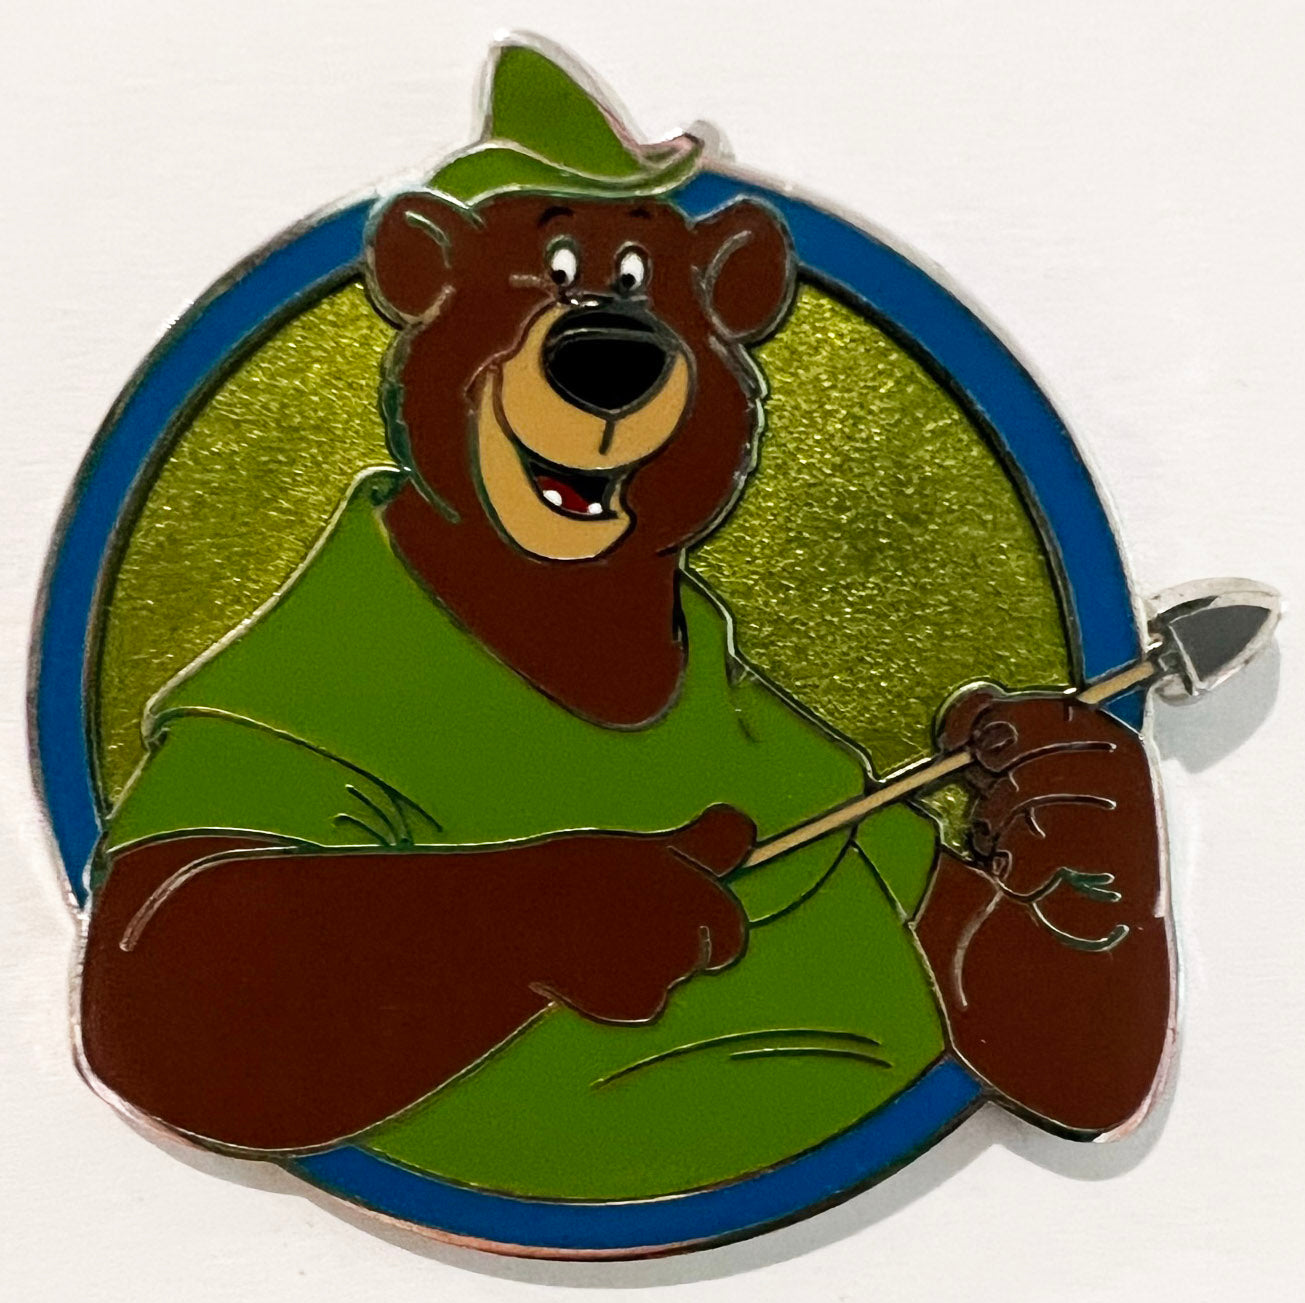 Little John Robin Hood Sidekicks Heroes vs Villains Mystery WDW Disney Pin  S02